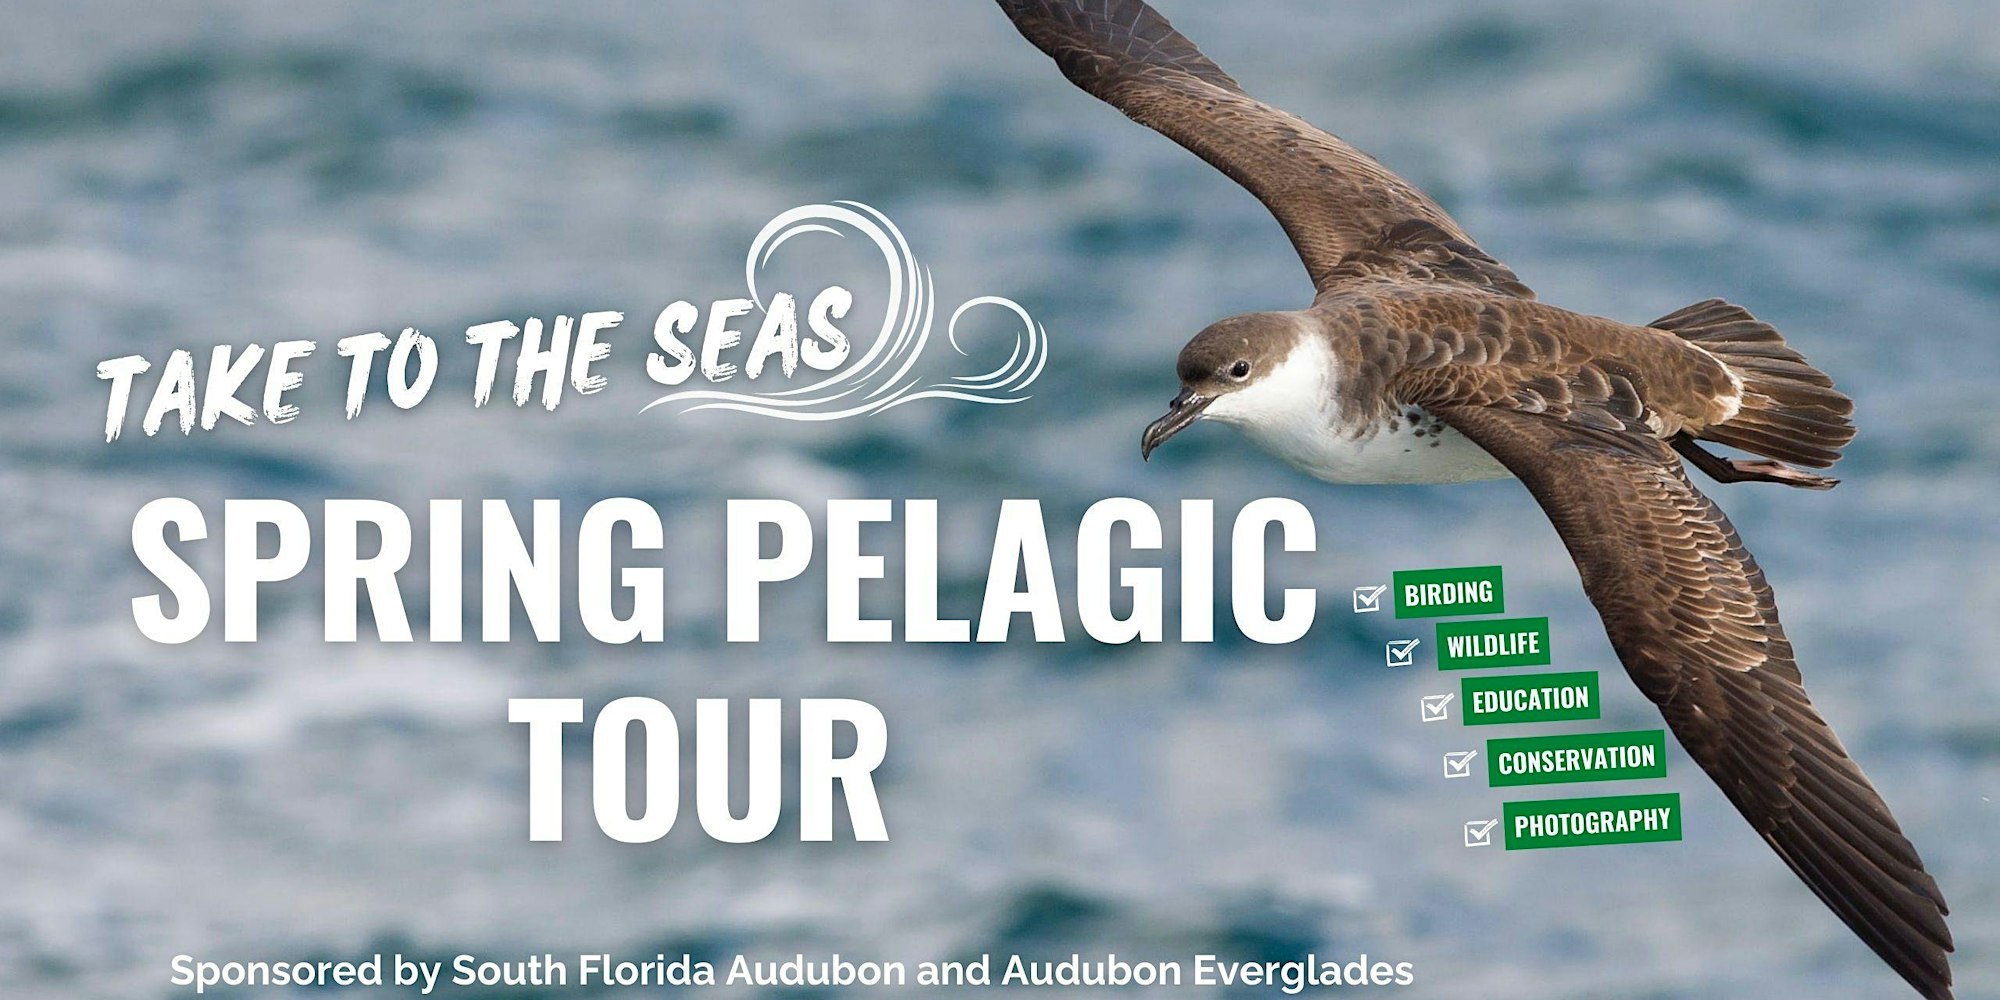 pelagic bird tours queensland